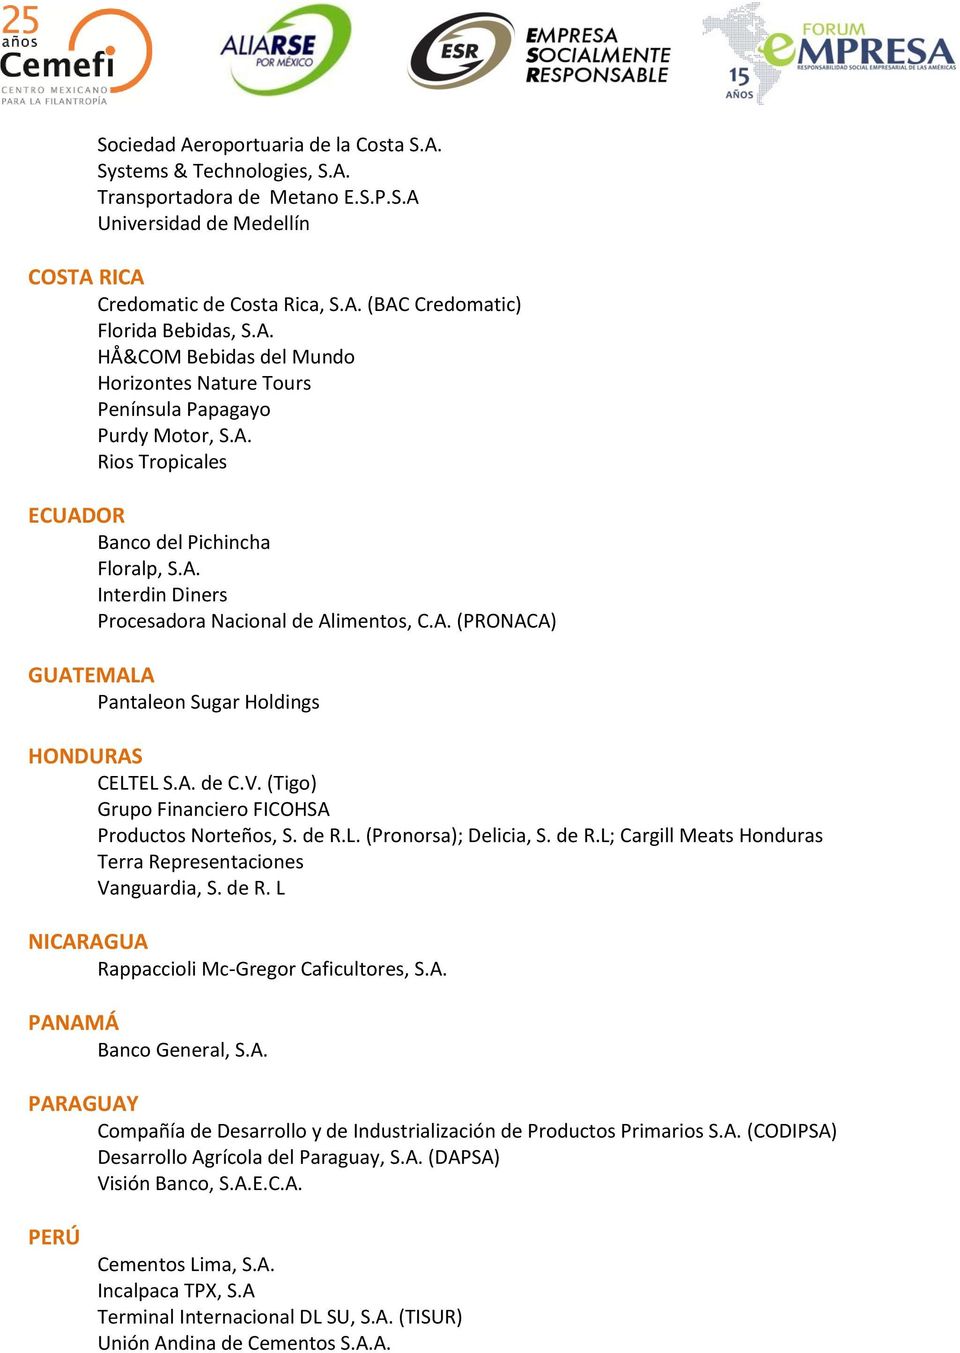 A. (PRONACA) GUATEMALA Pantaleon Sugar Holdings HONDURAS CELTEL S.A. de C.V. (Tigo) Grupo Financiero FICOHSA Productos Norteños, S. de R.L. (Pronorsa); Delicia, S. de R.L; Cargill Meats Honduras Terra Representaciones Vanguardia, S.